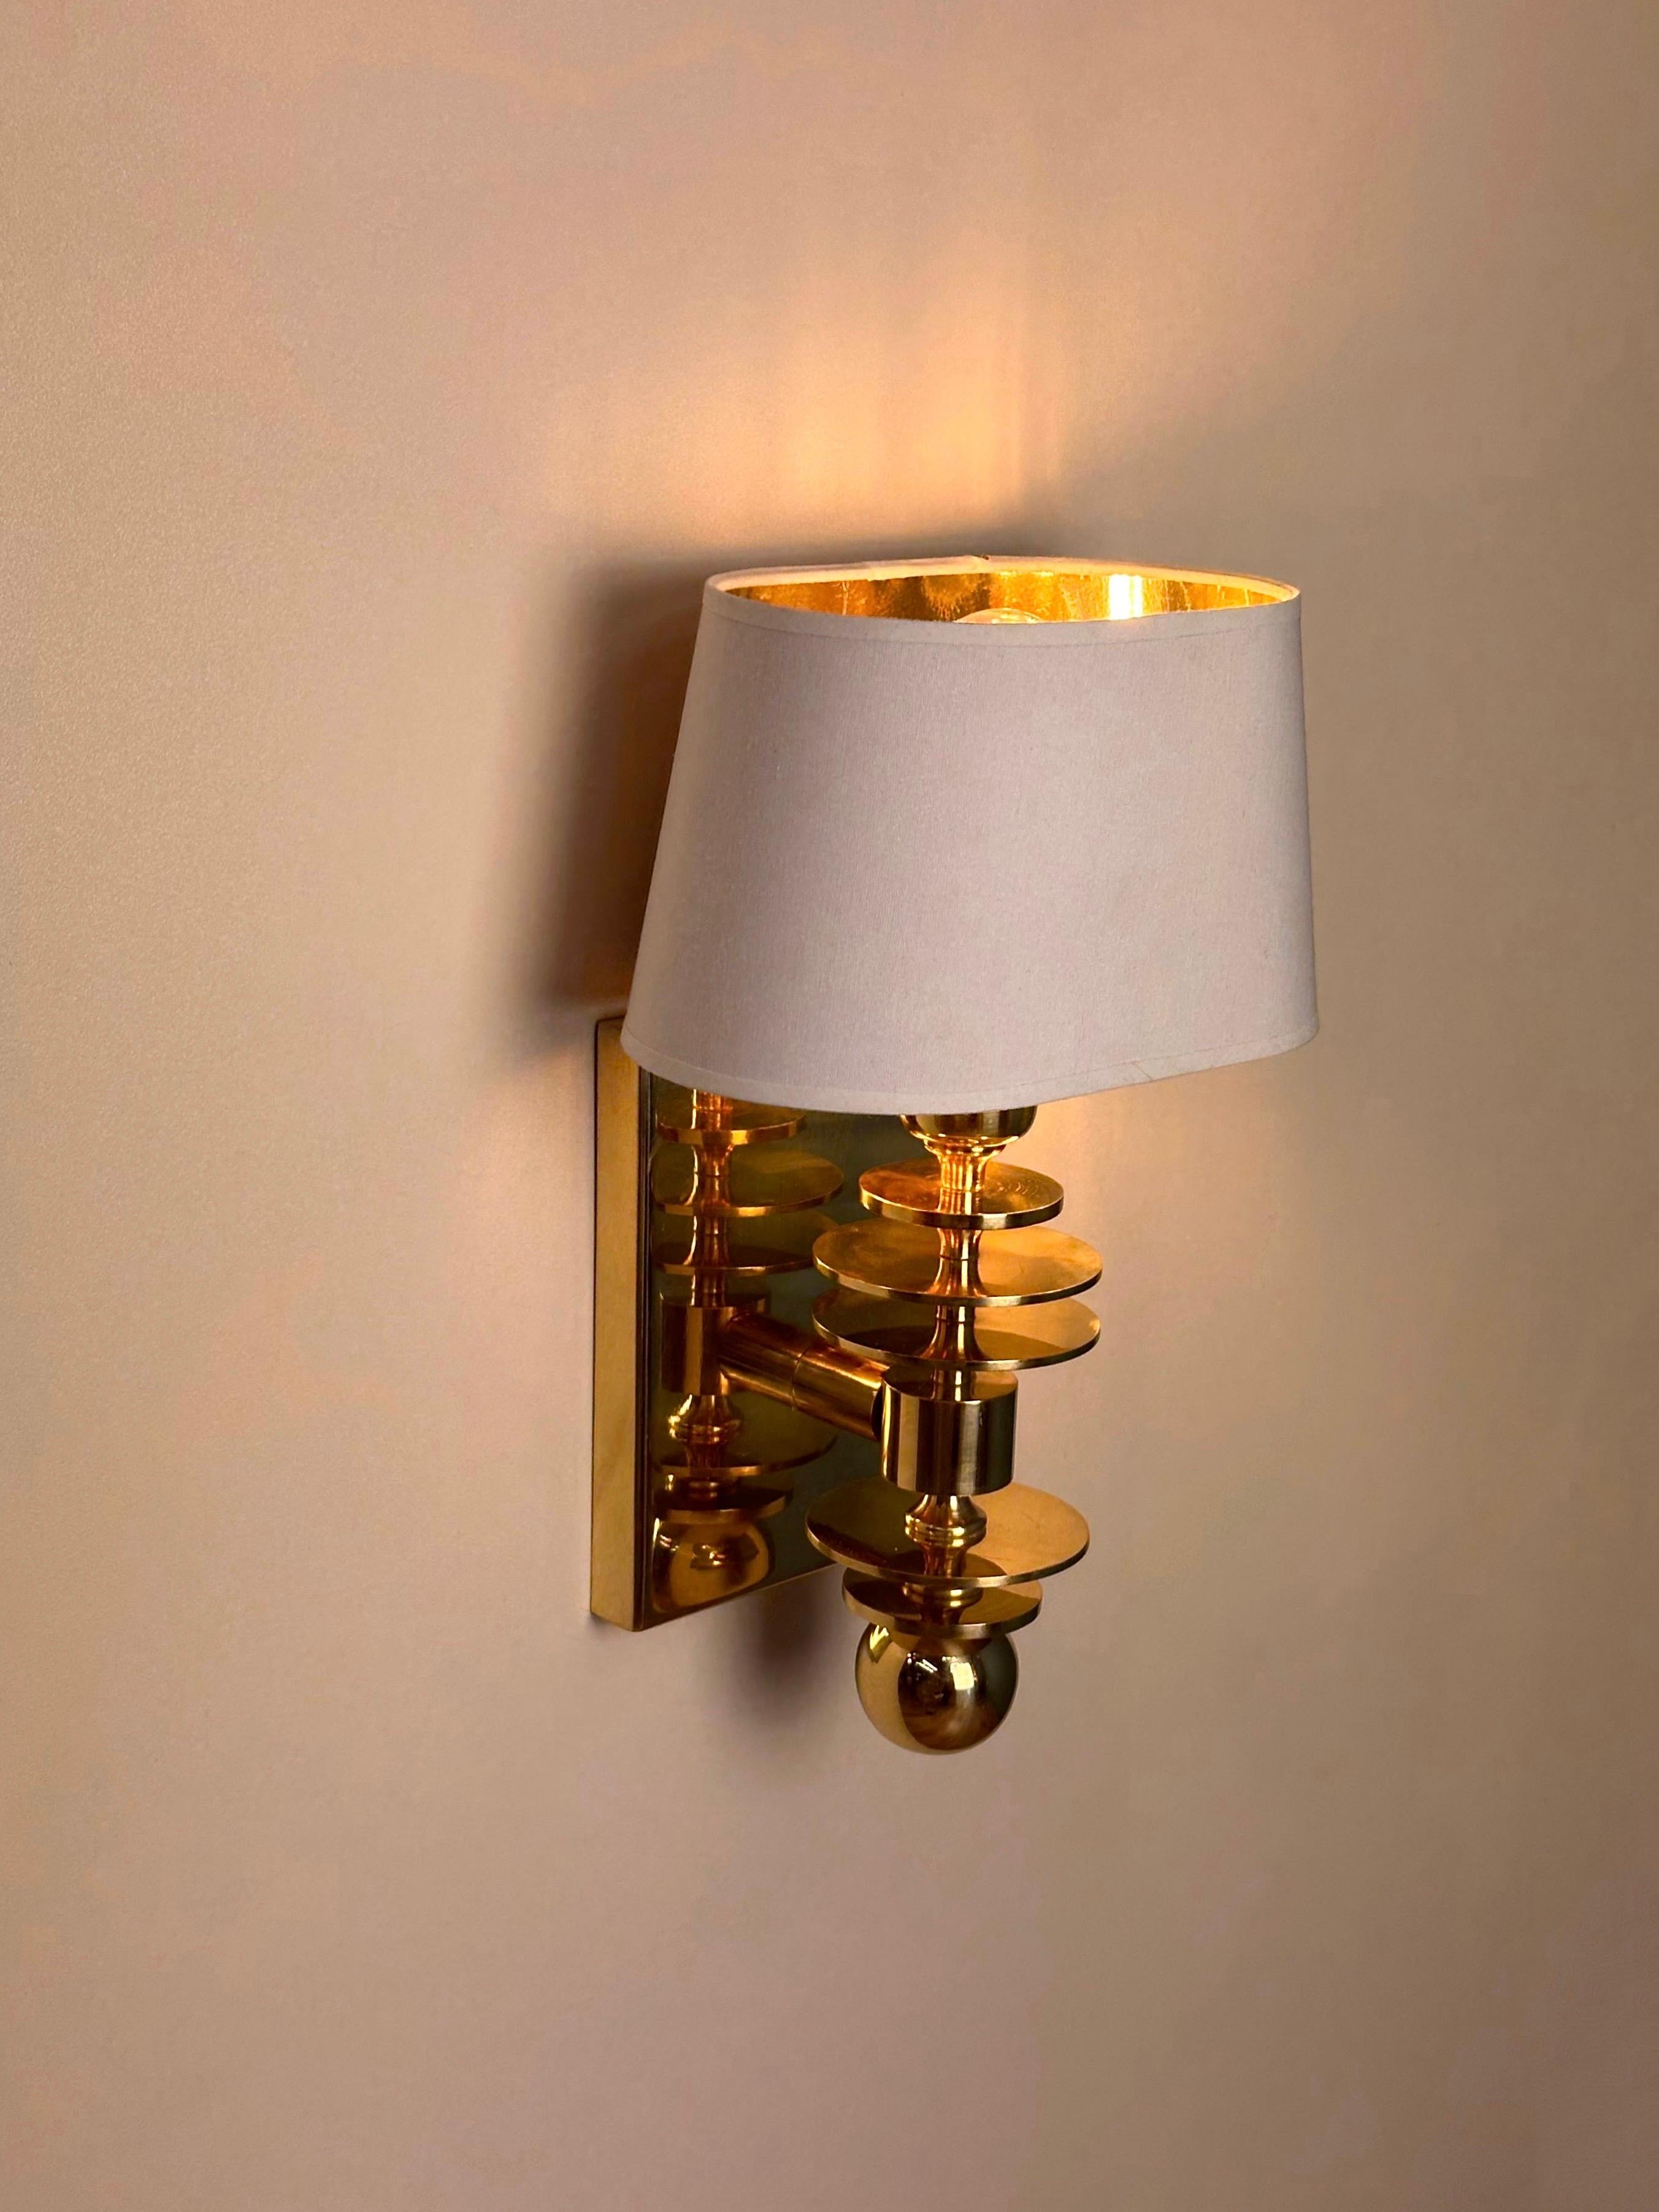 Marsala Shade Brass Wall Sconce Mid-Century Modern Lighting For Sale 4